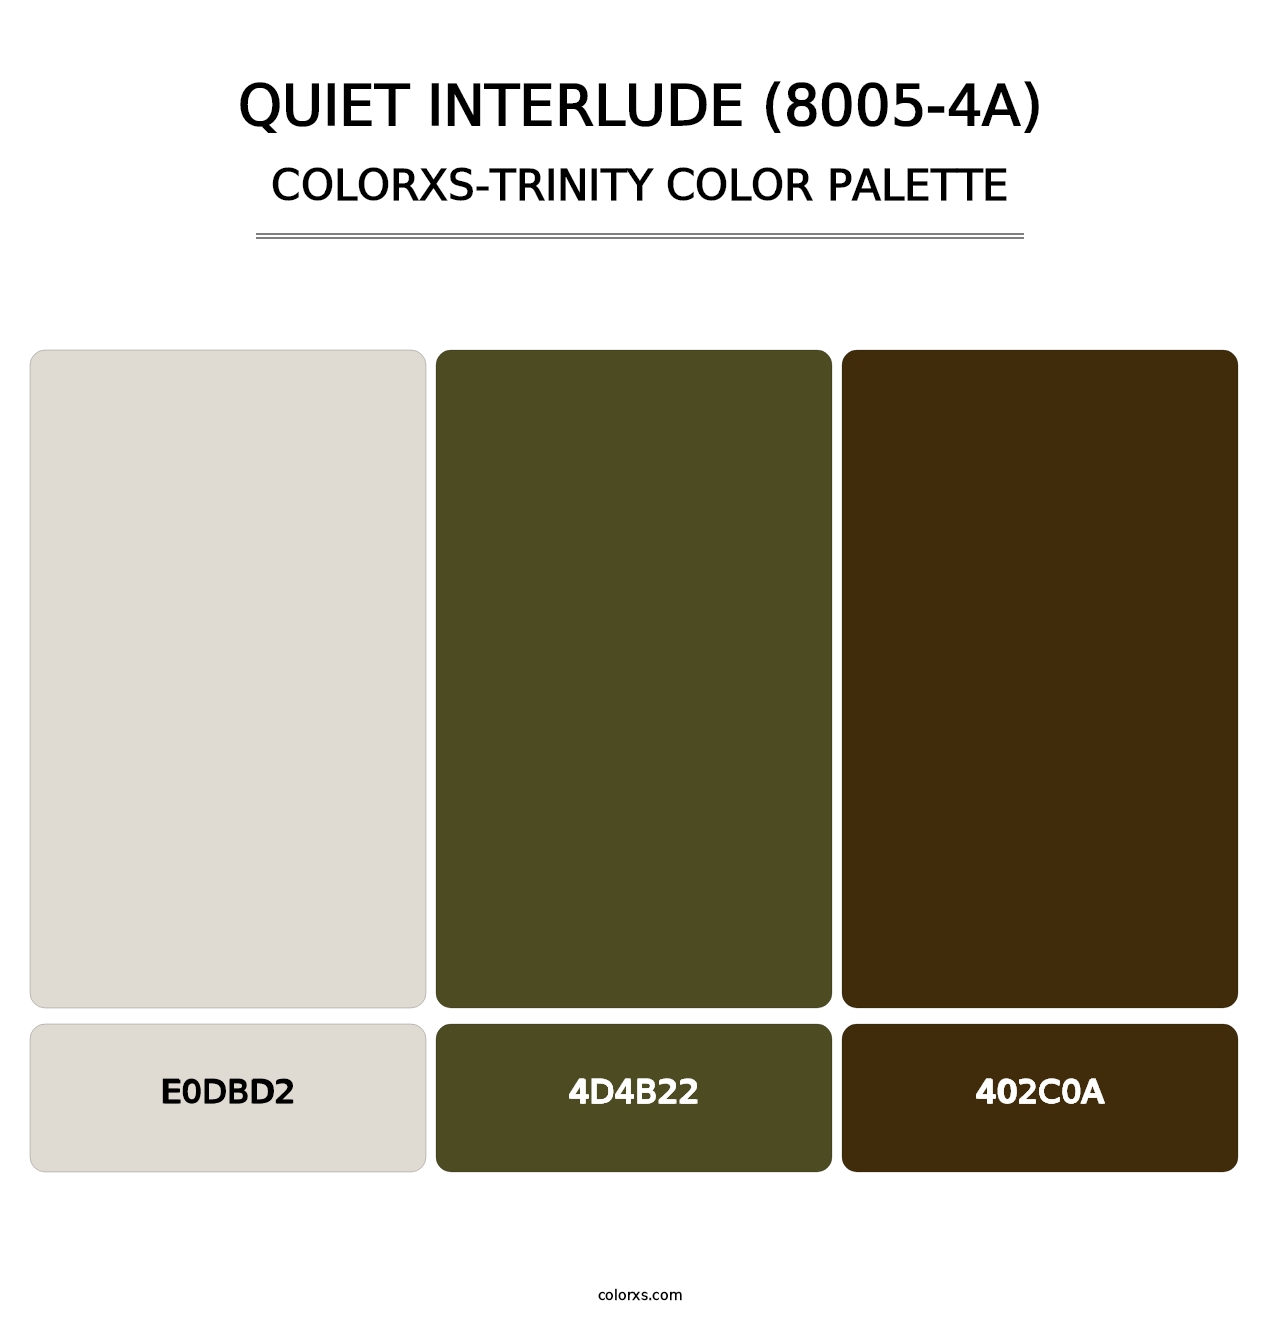 Quiet Interlude (8005-4A) - Colorxs Trinity Palette